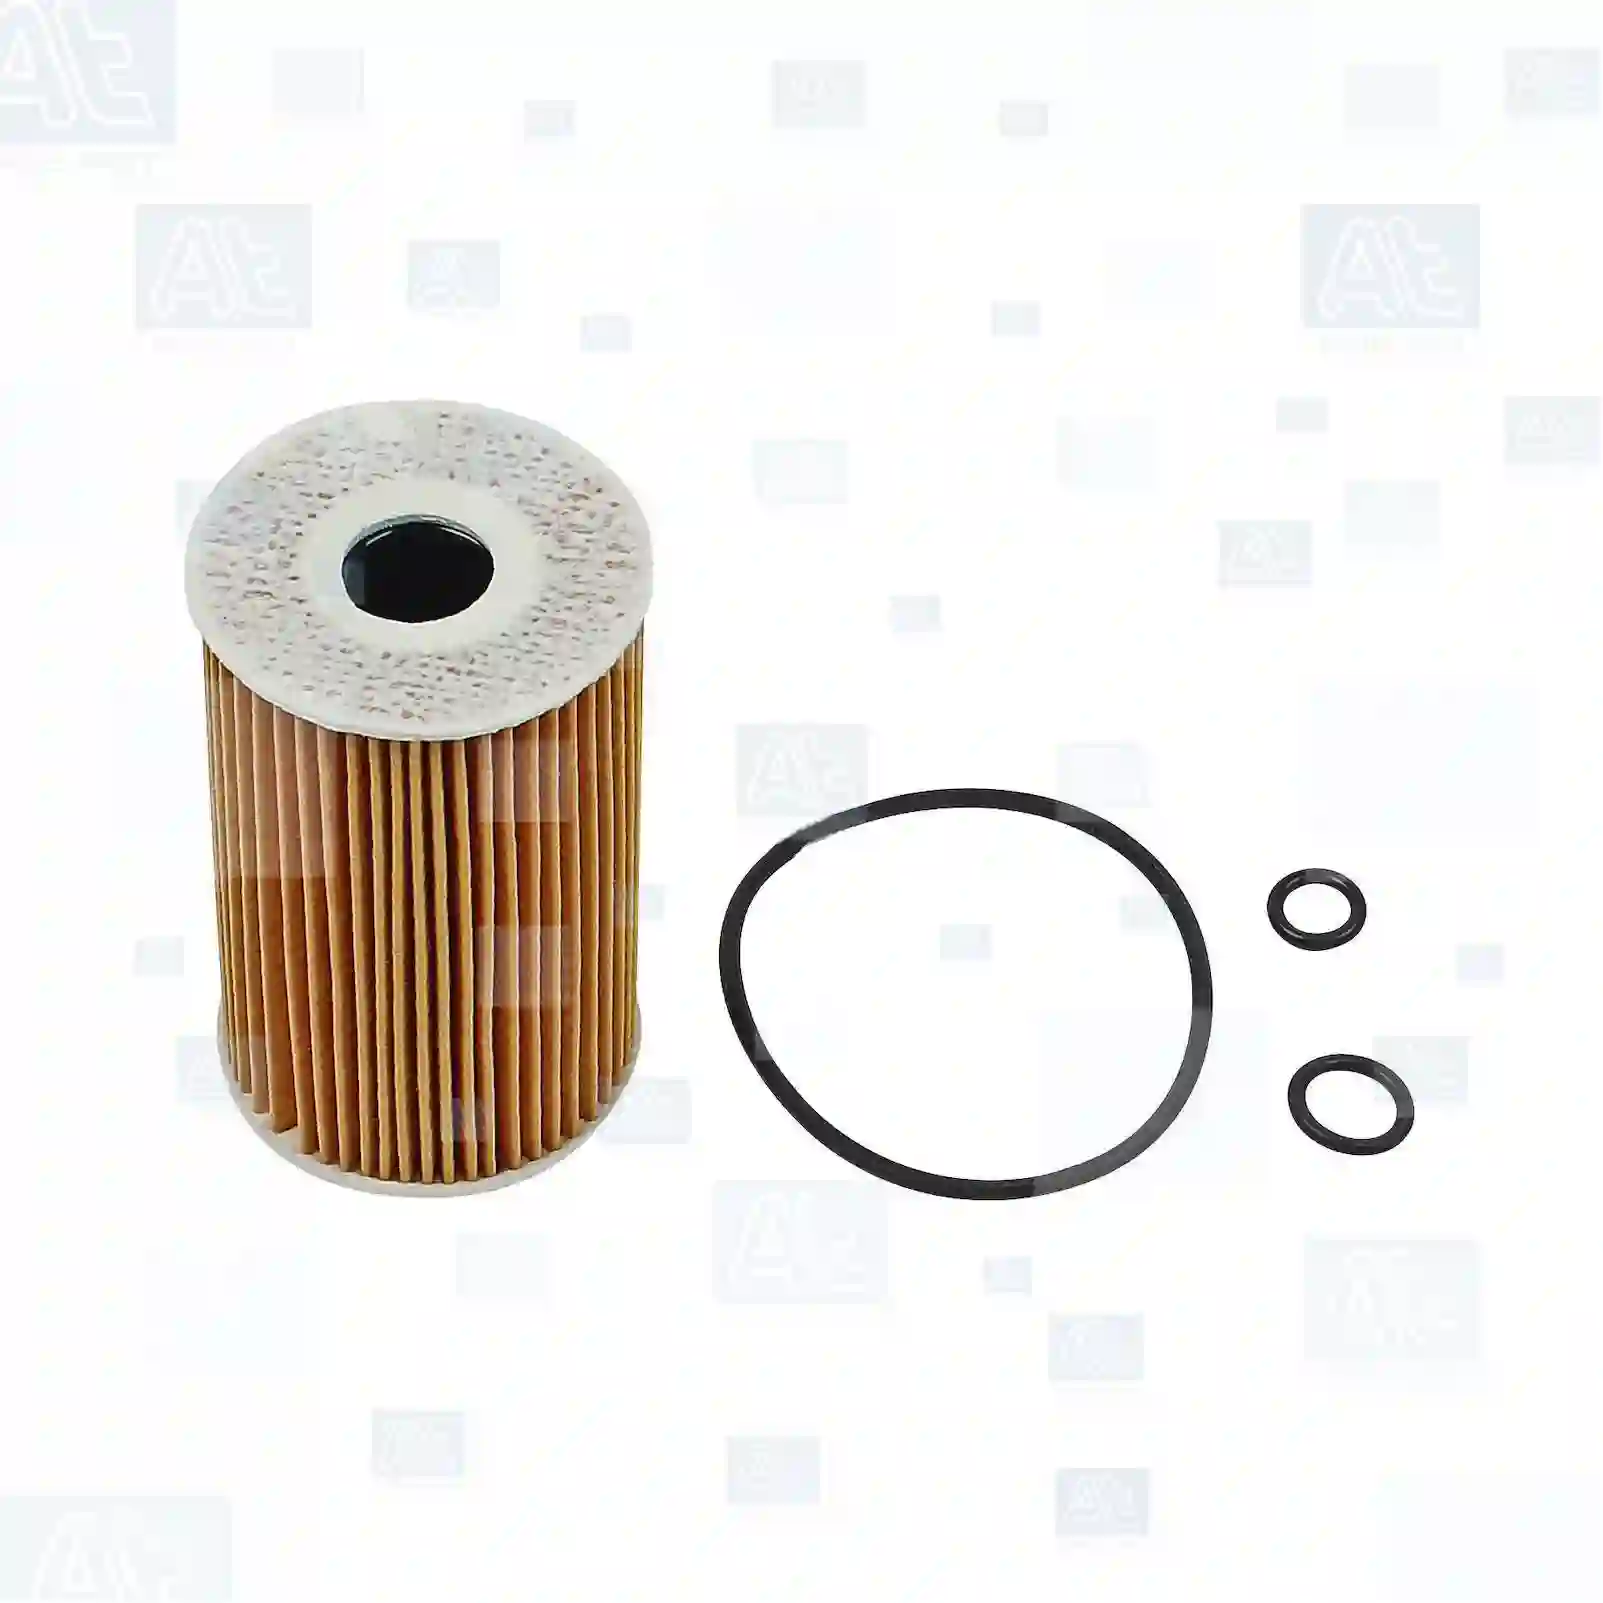 Oil Filter Oil filter insert, at no: 77703157 ,  oem no:03L115466, 03L115562, 03L115466, 03L115562, 03L115466, 03L115562, 03L115466, 03L115562, ZG01731-0008 At Spare Part | Engine, Accelerator Pedal, Camshaft, Connecting Rod, Crankcase, Crankshaft, Cylinder Head, Engine Suspension Mountings, Exhaust Manifold, Exhaust Gas Recirculation, Filter Kits, Flywheel Housing, General Overhaul Kits, Engine, Intake Manifold, Oil Cleaner, Oil Cooler, Oil Filter, Oil Pump, Oil Sump, Piston & Liner, Sensor & Switch, Timing Case, Turbocharger, Cooling System, Belt Tensioner, Coolant Filter, Coolant Pipe, Corrosion Prevention Agent, Drive, Expansion Tank, Fan, Intercooler, Monitors & Gauges, Radiator, Thermostat, V-Belt / Timing belt, Water Pump, Fuel System, Electronical Injector Unit, Feed Pump, Fuel Filter, cpl., Fuel Gauge Sender,  Fuel Line, Fuel Pump, Fuel Tank, Injection Line Kit, Injection Pump, Exhaust System, Clutch & Pedal, Gearbox, Propeller Shaft, Axles, Brake System, Hubs & Wheels, Suspension, Leaf Spring, Universal Parts / Accessories, Steering, Electrical System, Cabin